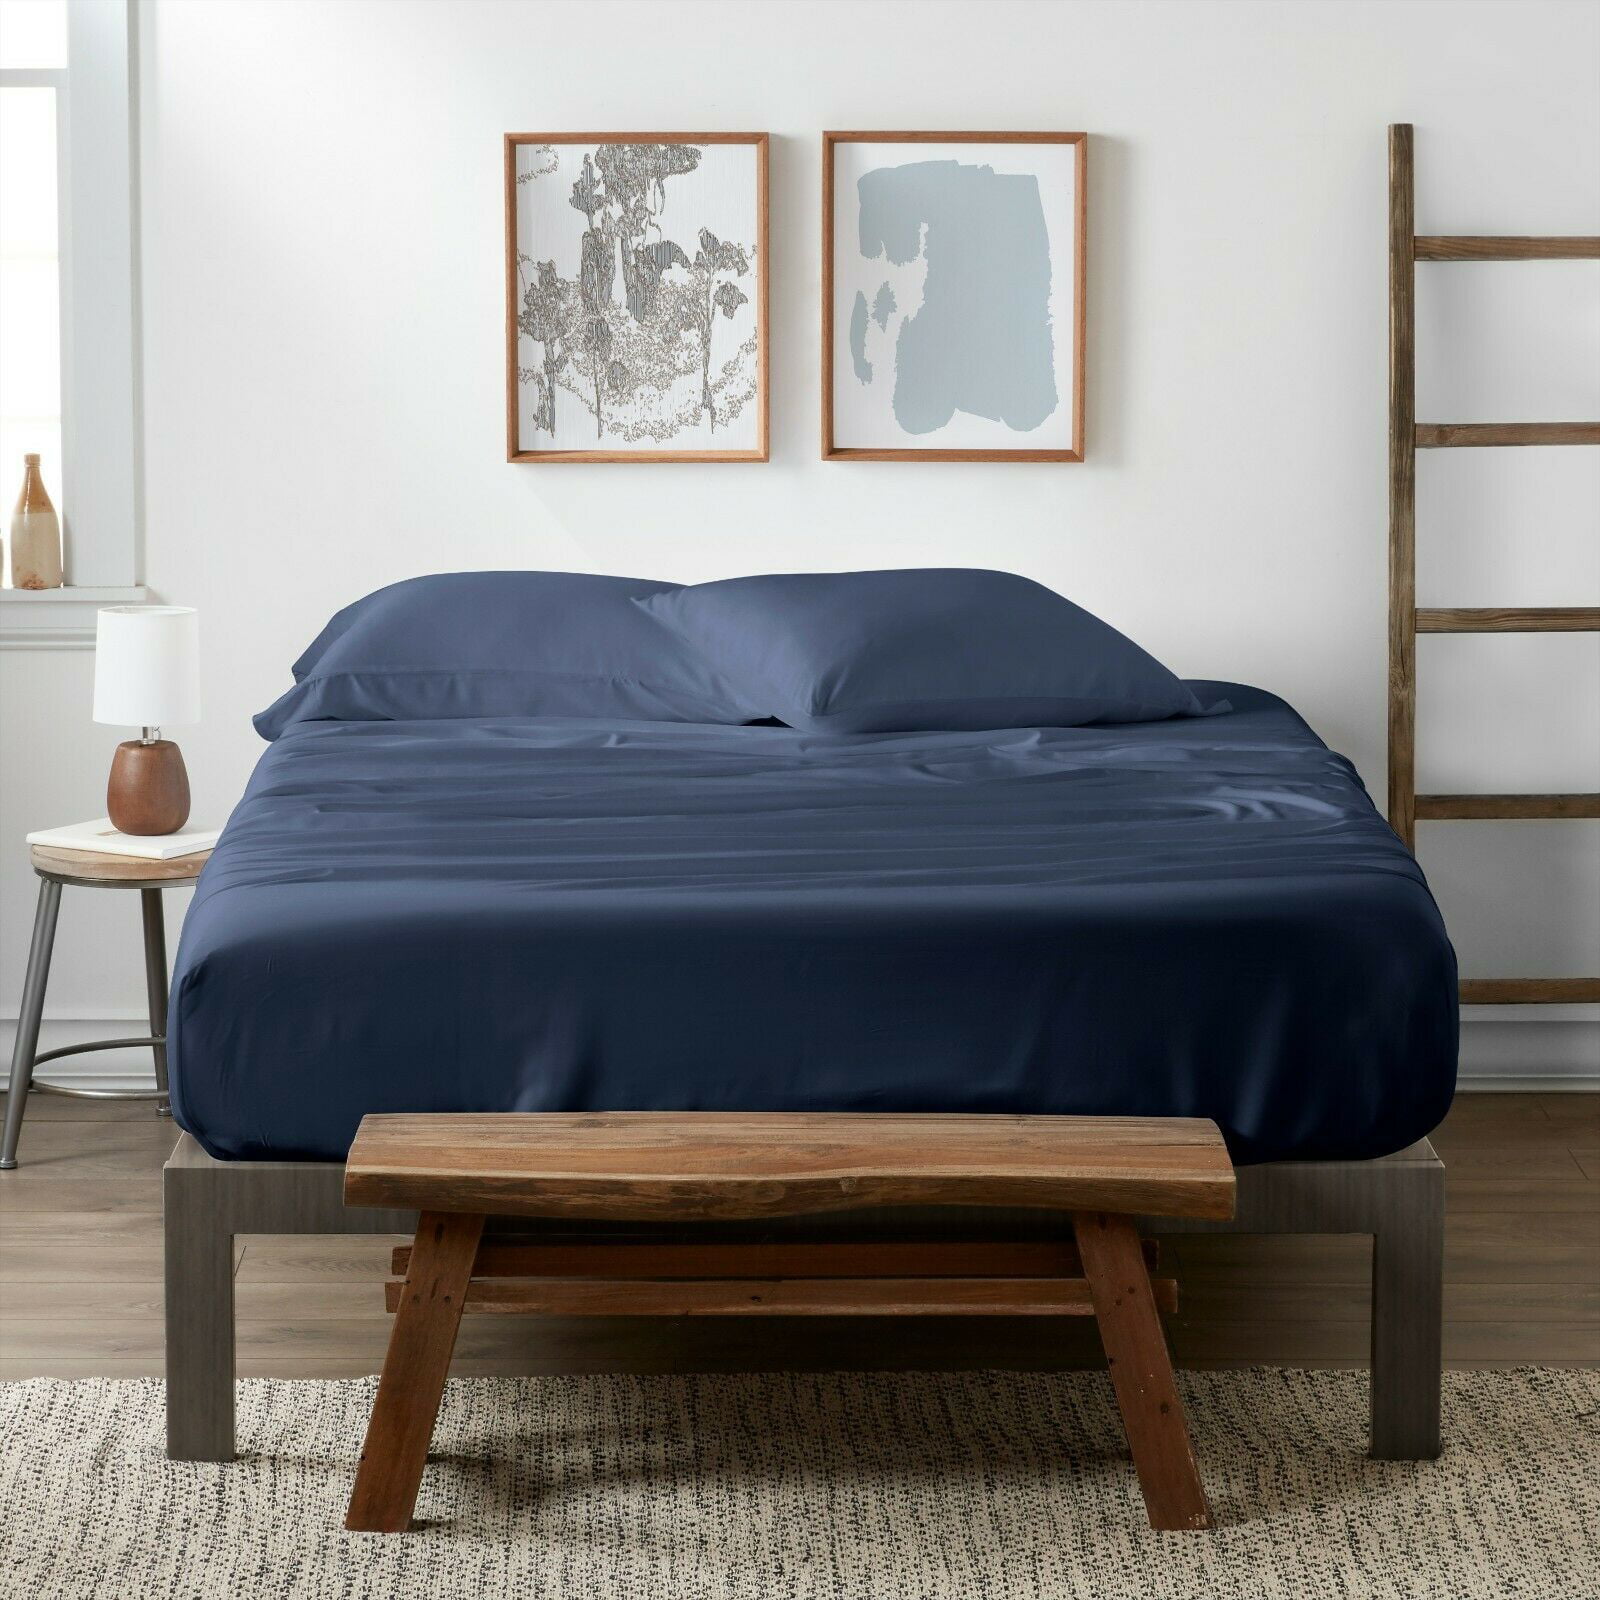 Queen 4 Piece Luxury Home Premium Ultra Soft Bamboo Luxury Bed Sheet Set 